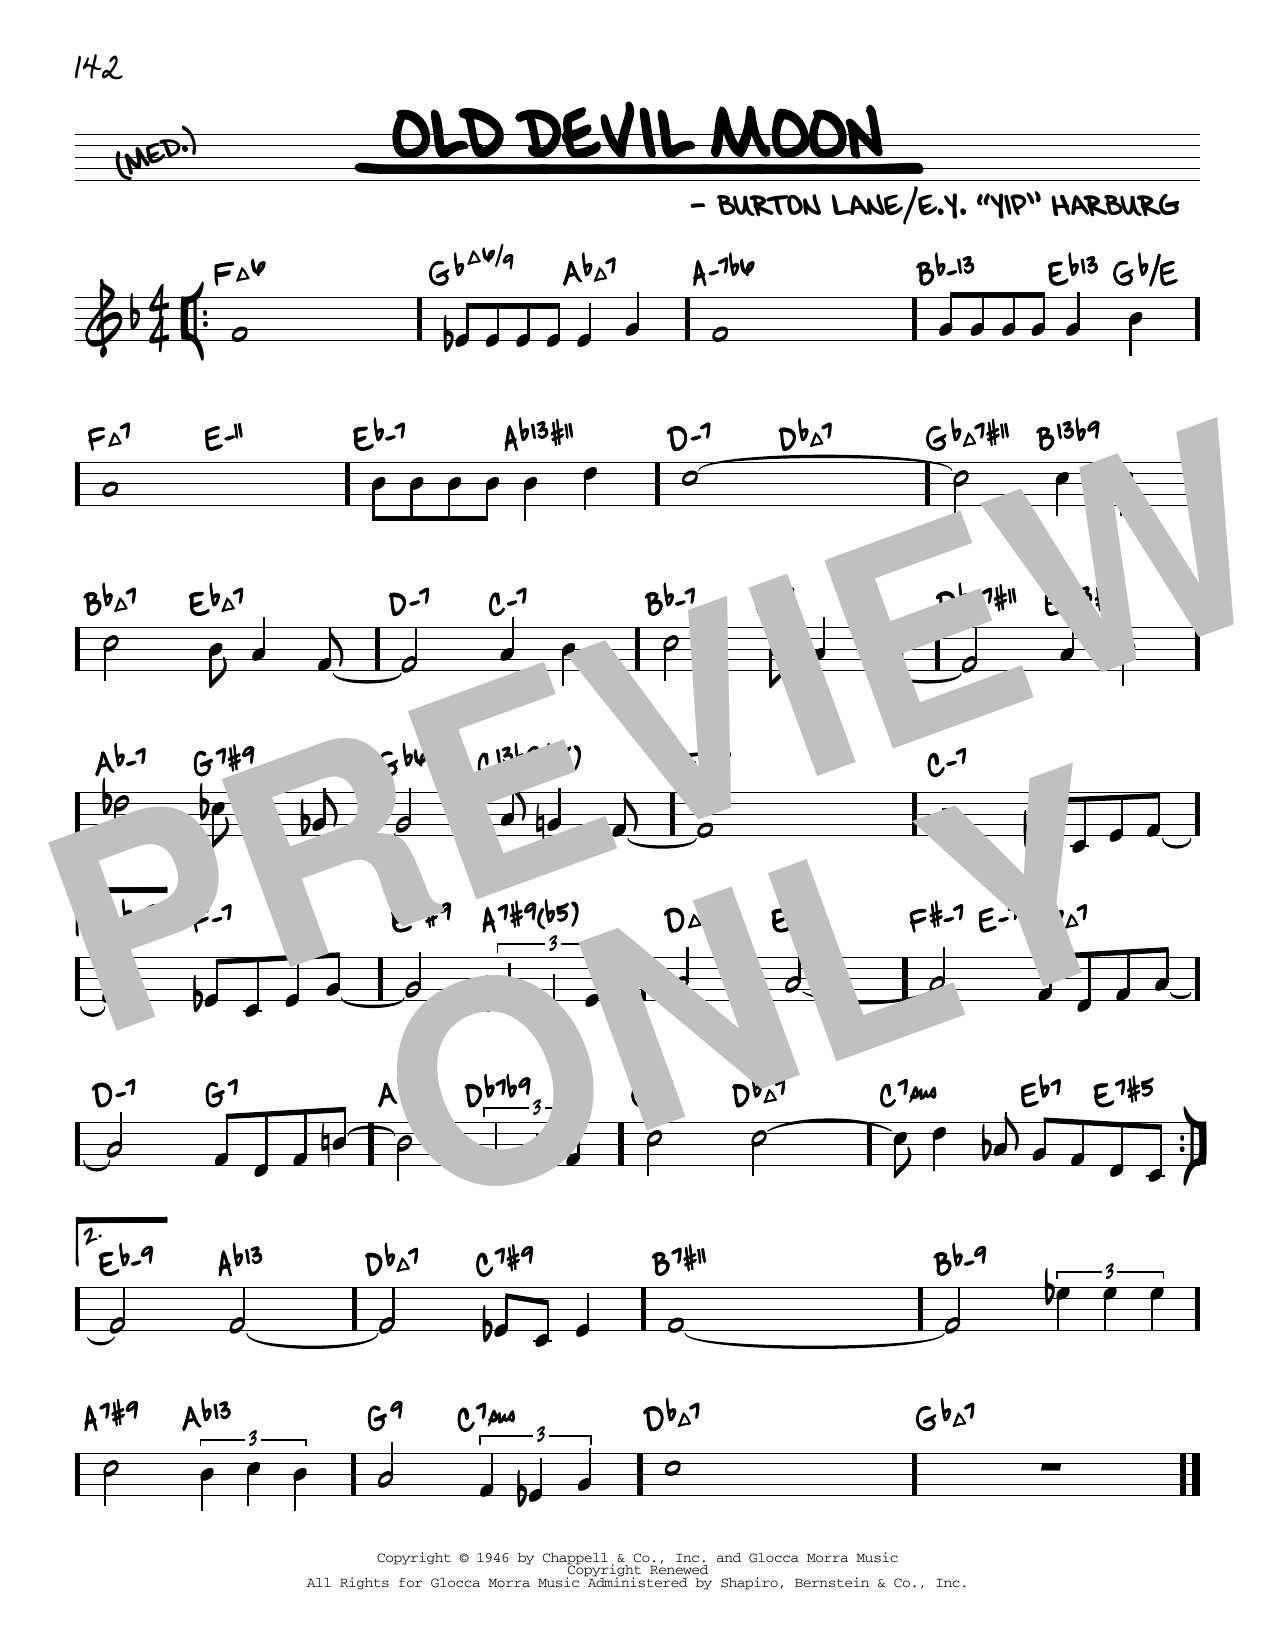 Burton Lane Old Devil Moon (arr. David Hazeltine) Sheet Music Notes & Chords for Real Book – Enhanced Chords - Download or Print PDF